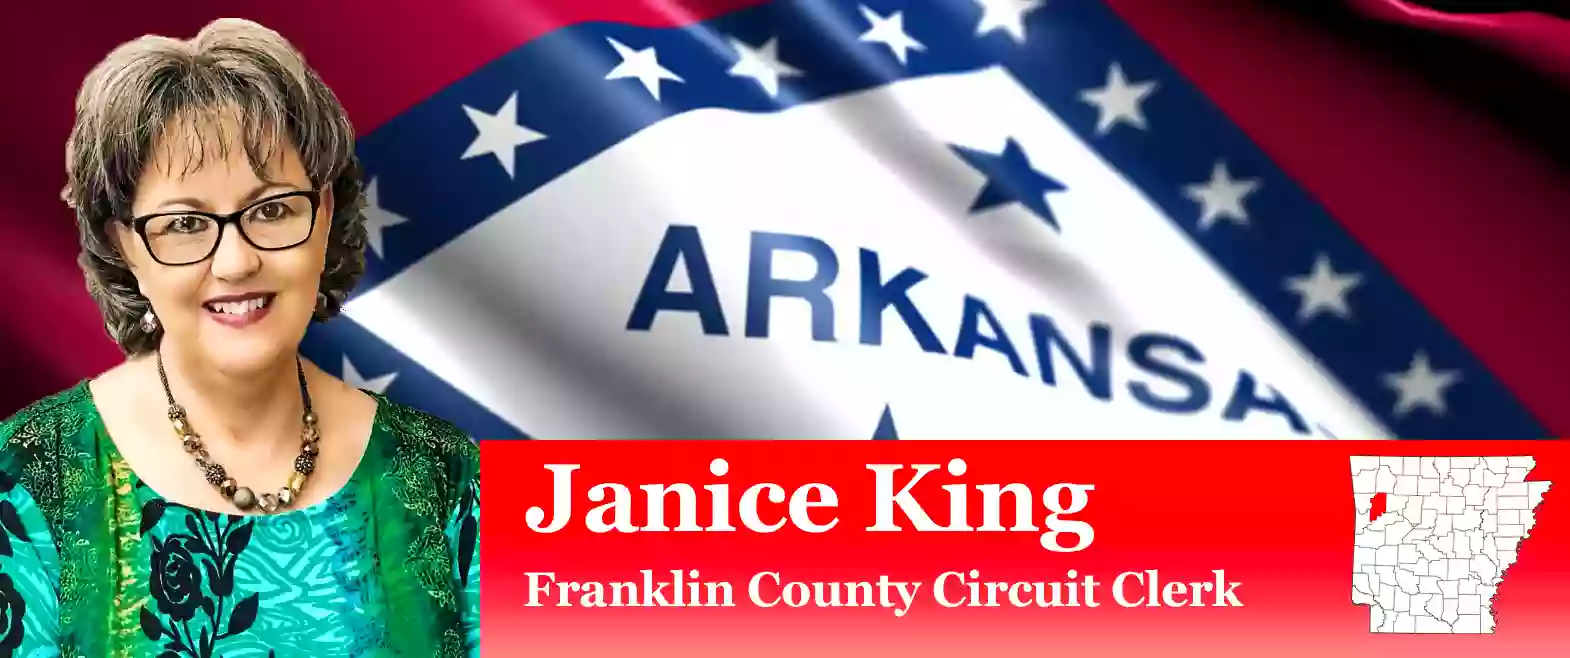 Franklin County Circuit Clerk